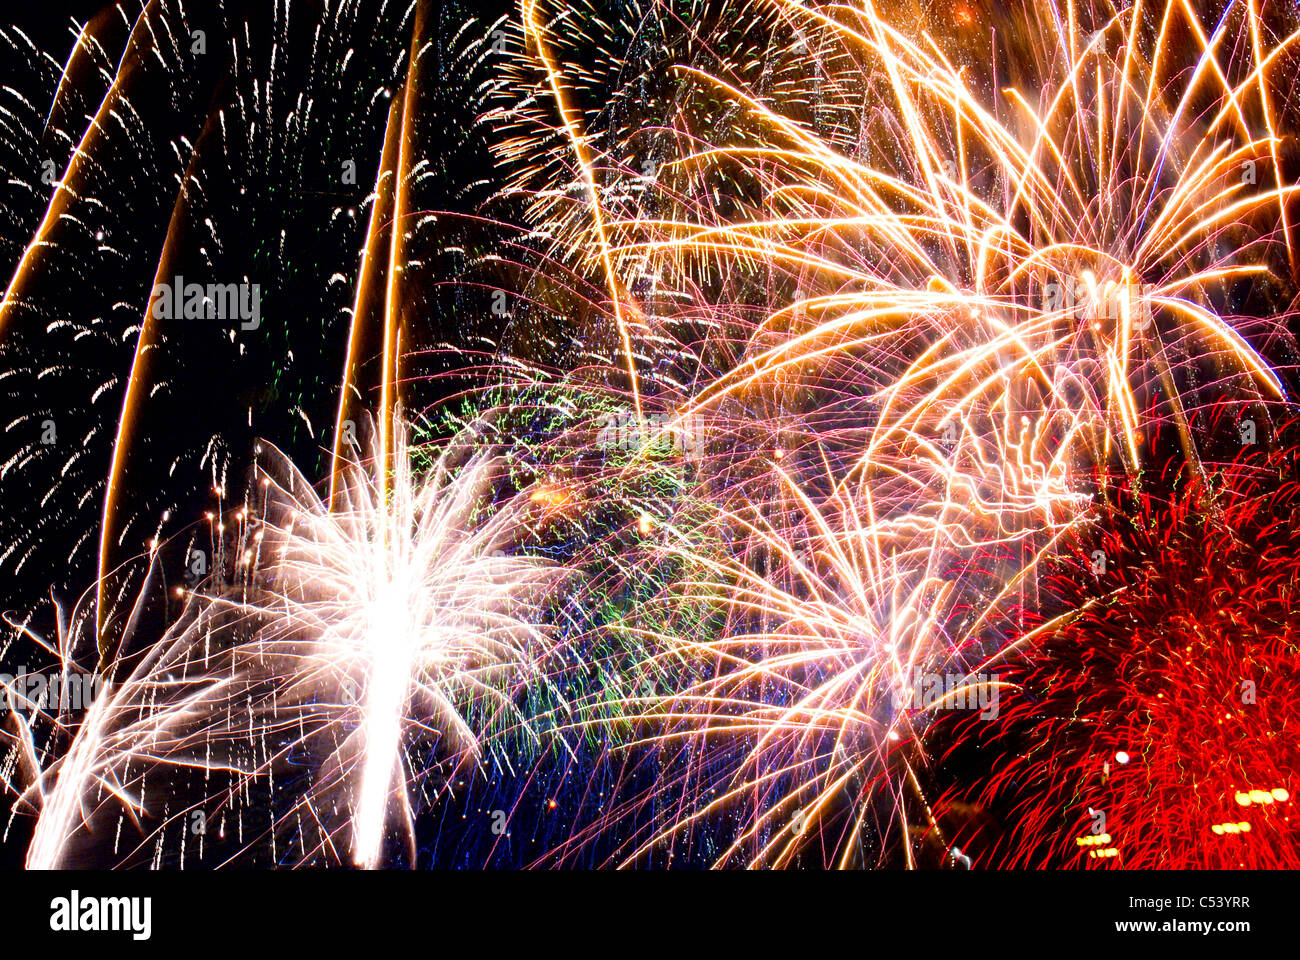 Digital collage of multiple fireworks detonations against the night sky. Stock Photo